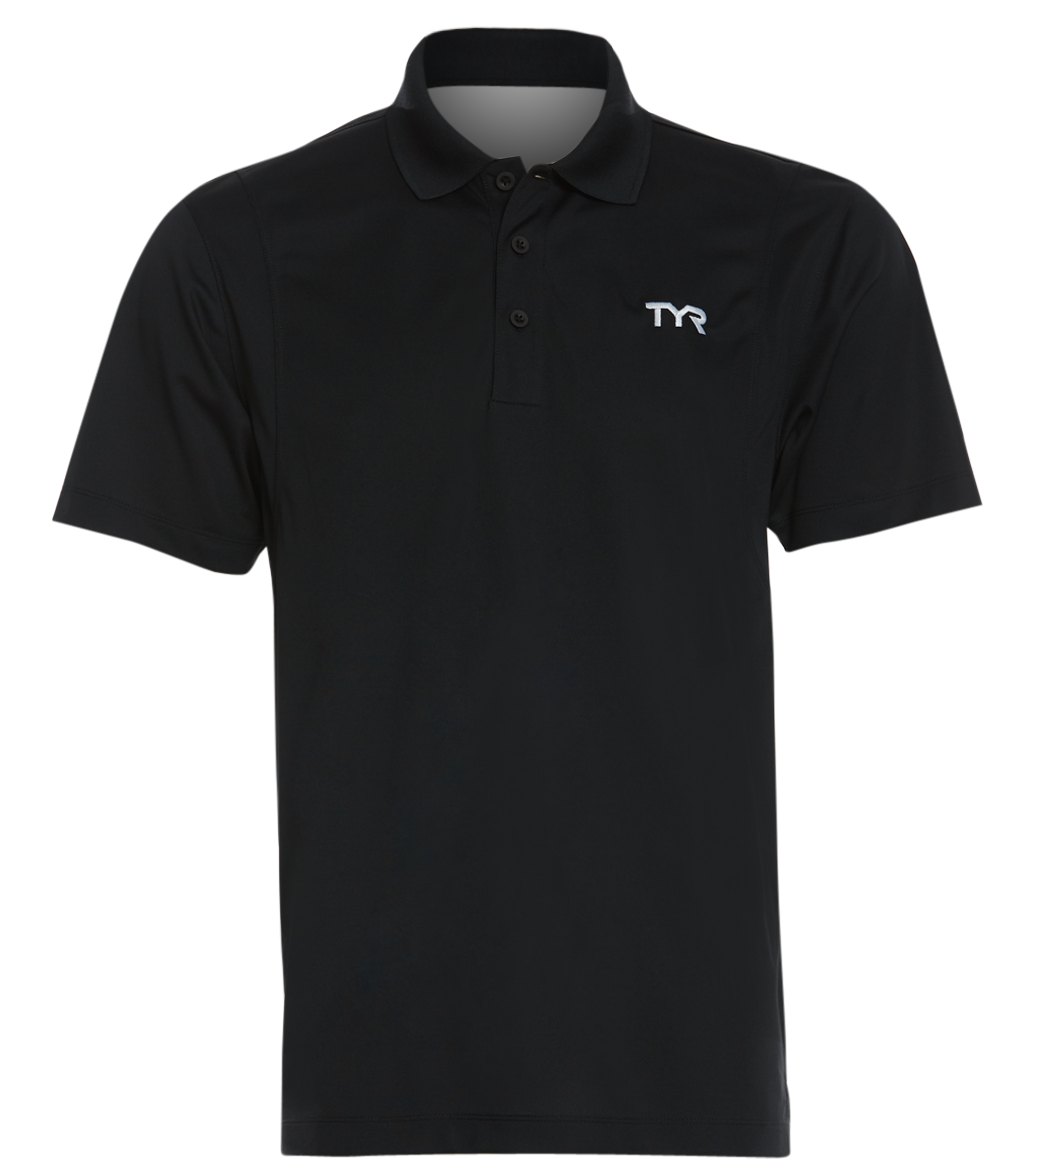 TYR Men's Alliance Tech Polo Shirt - Black Large Polyester - Swimoutlet.com